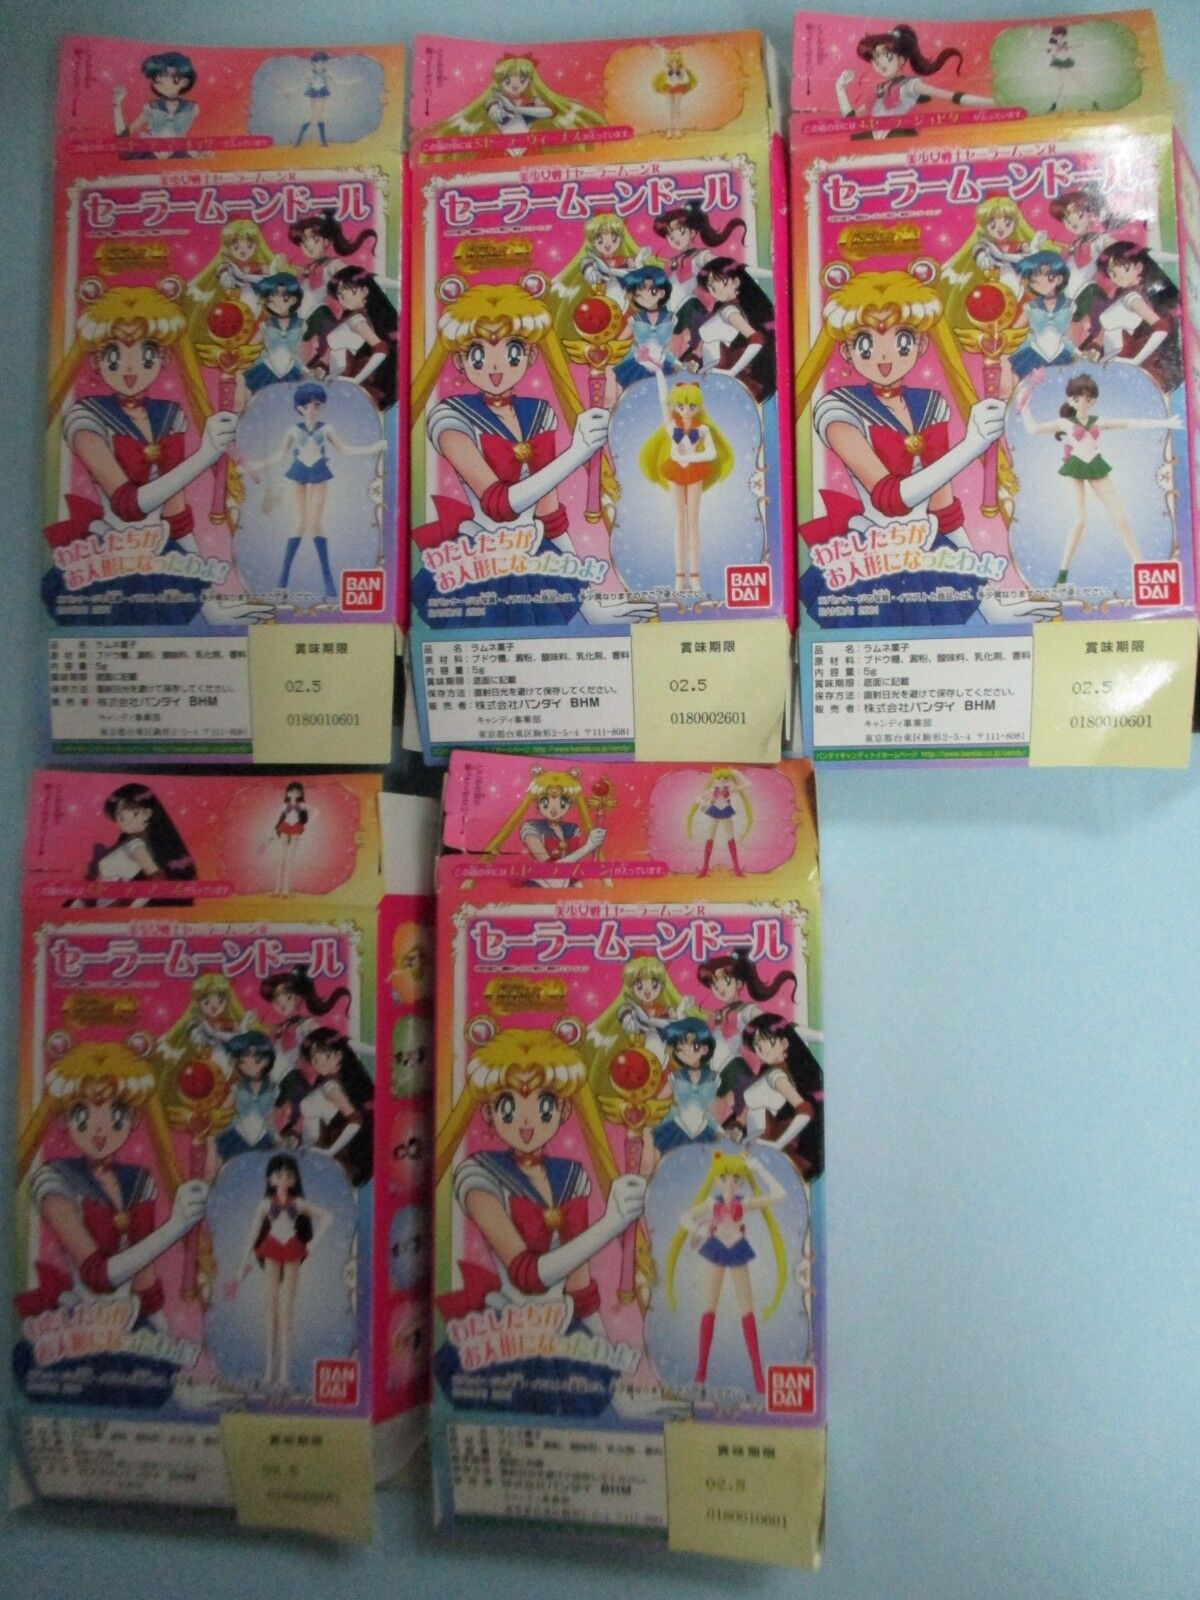 Bandai Sailor Moon World Part 1 Gashapon Figure 5 pcs set